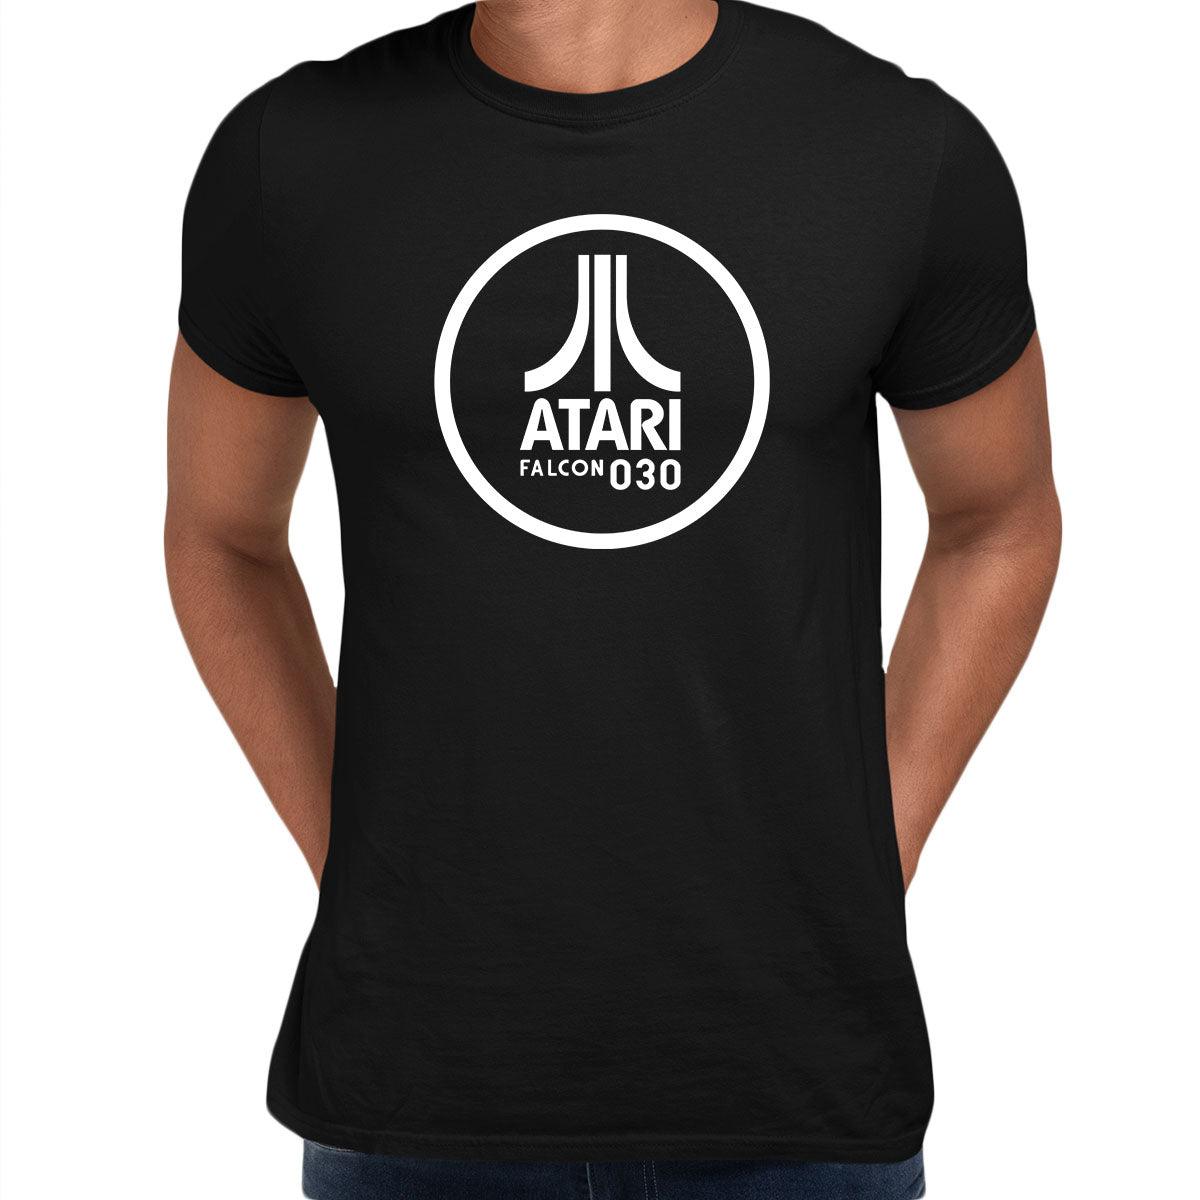 Atari Falcon 030 Big size logo T shirt - Kuzi Tees